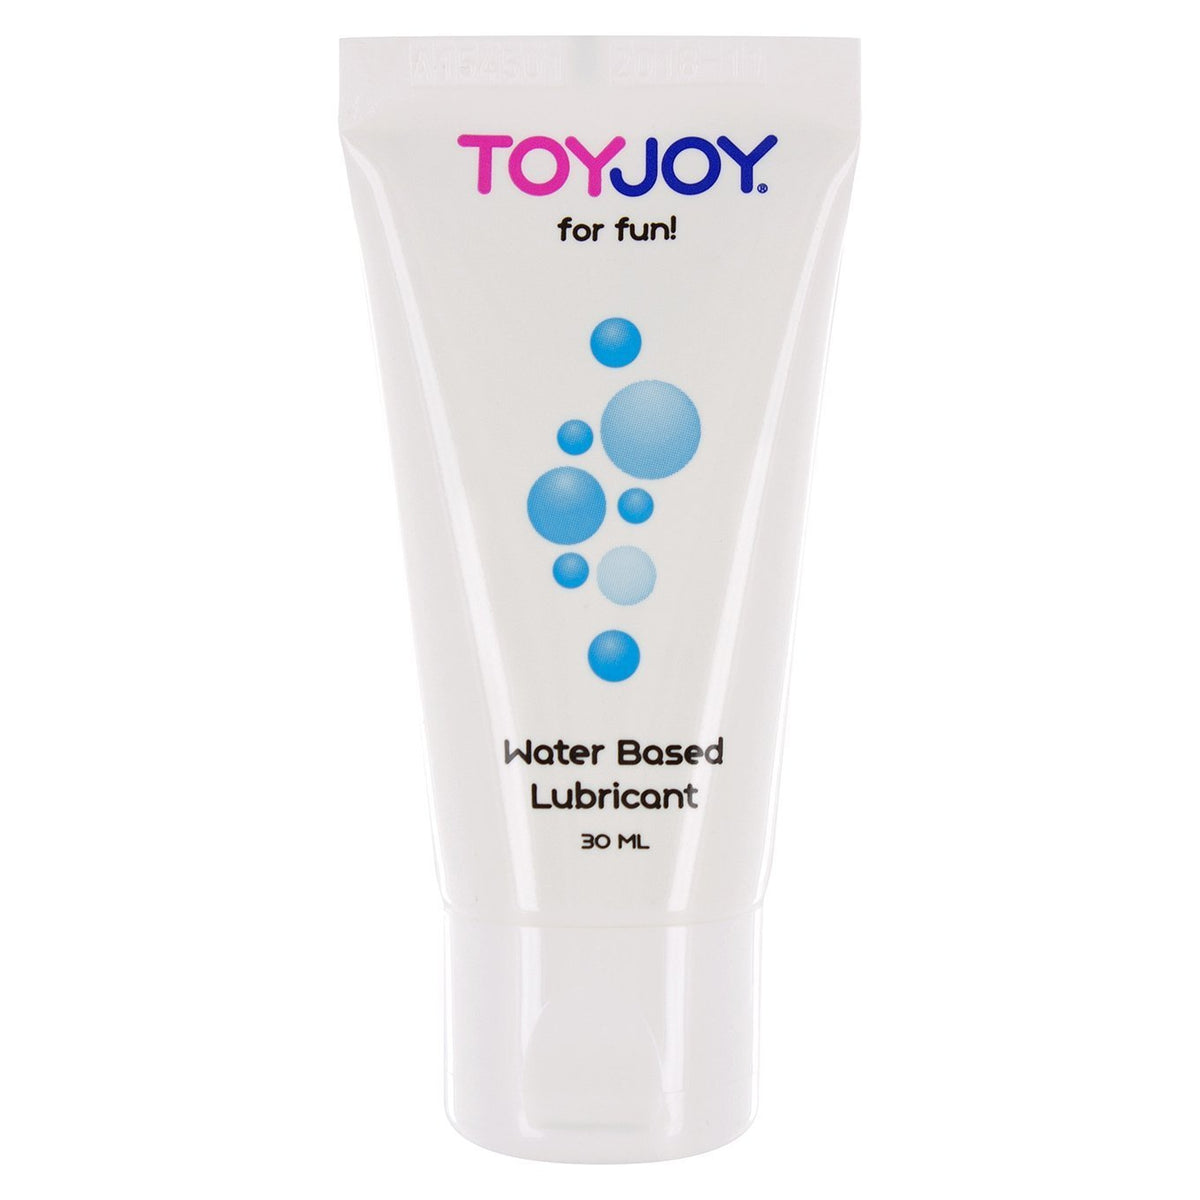 ToyJoy - Waterbased Lubricant 30 ml (Lube) -  Lube (Water Based)  Durio.sg